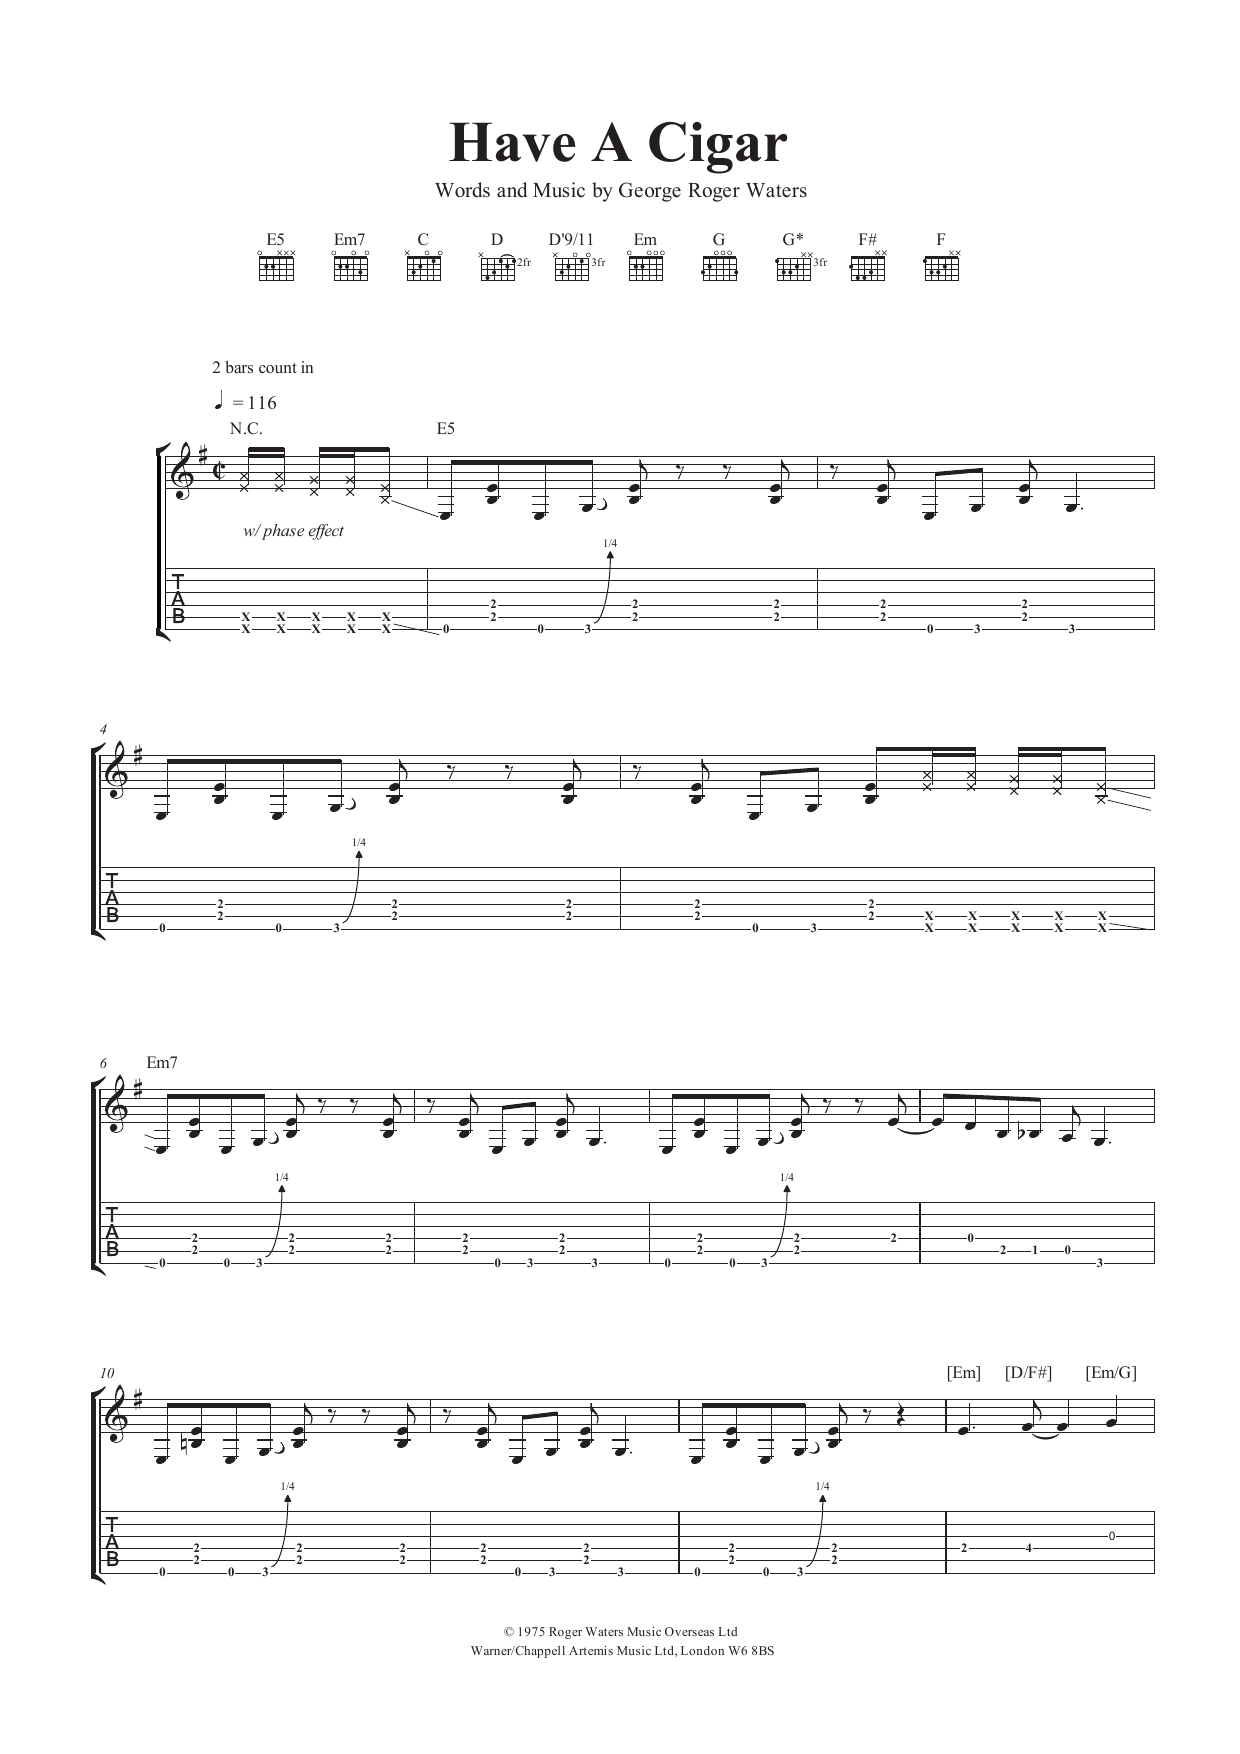 Pink Floyd Have A Cigar Sheet Music Notes & Chords for Ukulele - Download or Print PDF